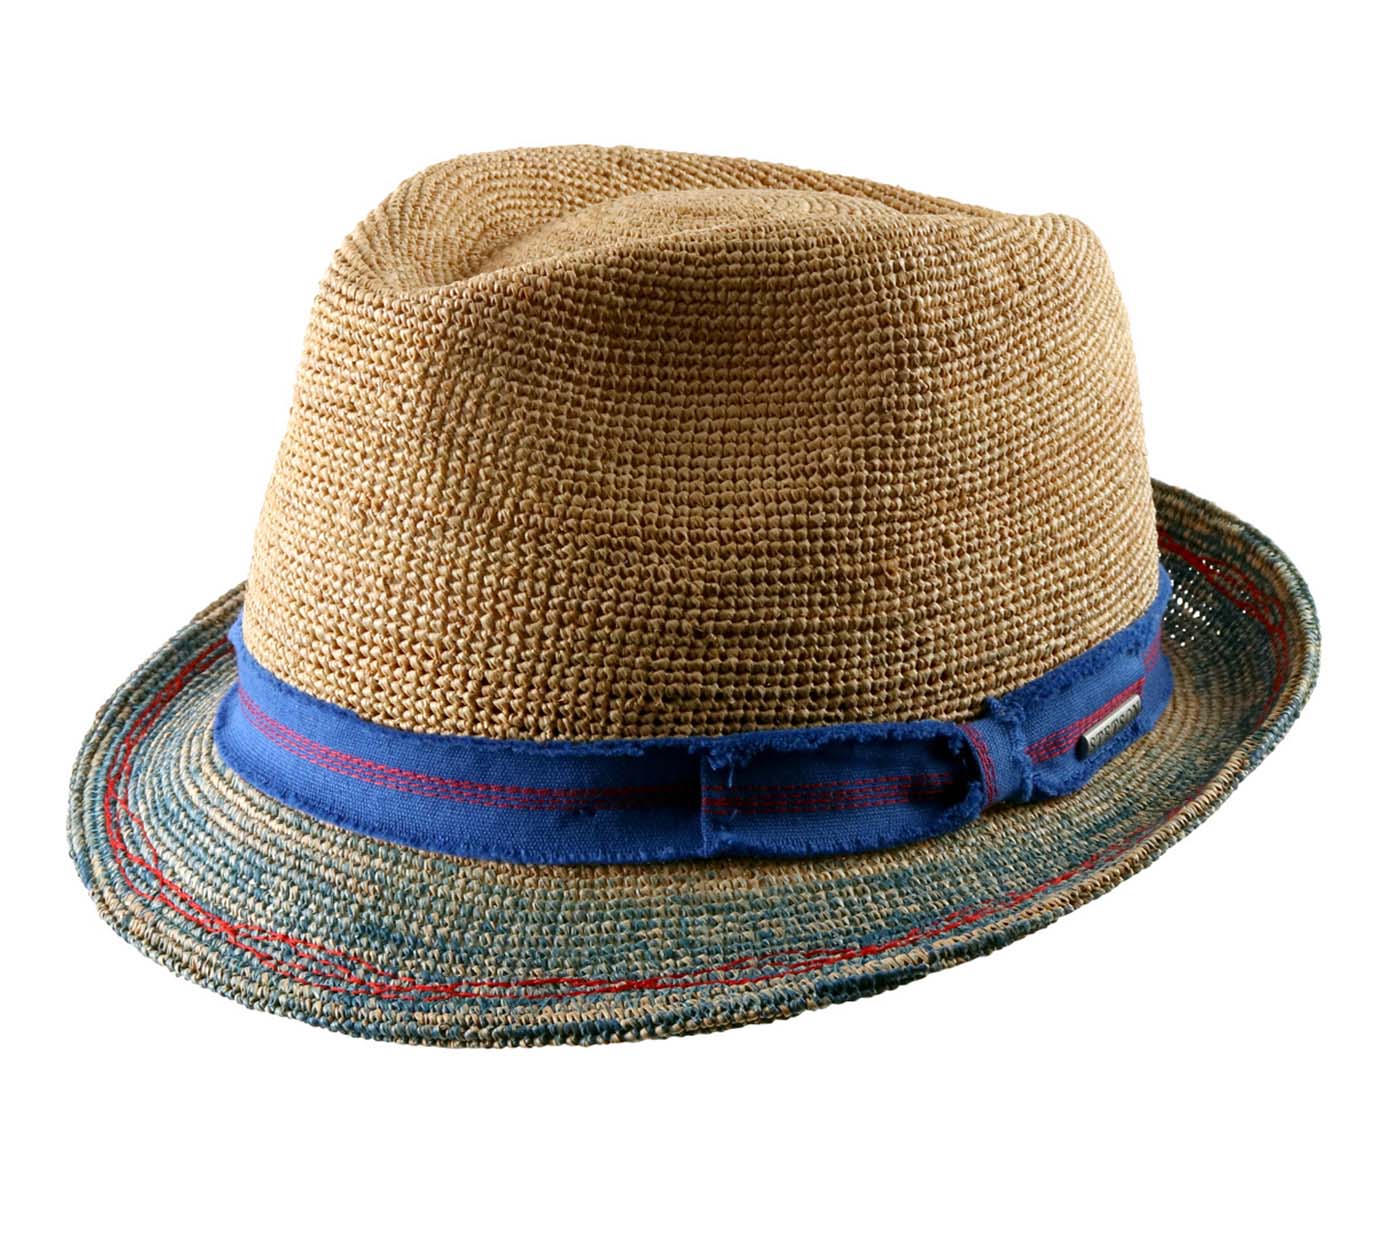 Stetson Sombrero de Paja Licano Toyo Trilby Hombre Playa Sol con Banda Grosgrain Primavera/Verano 